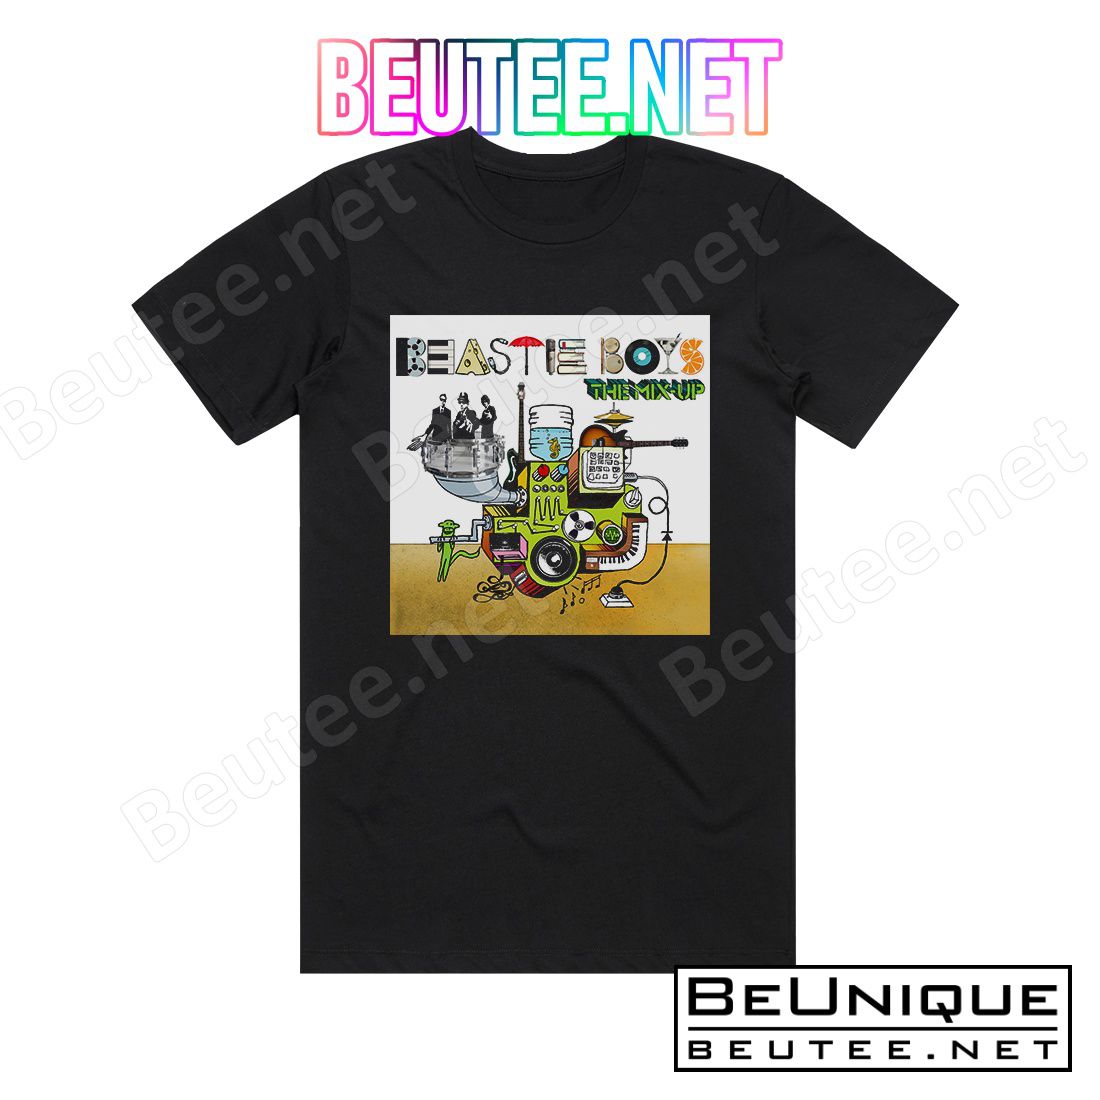 Beastie Boys The Mix Up Album Cover T-Shirt